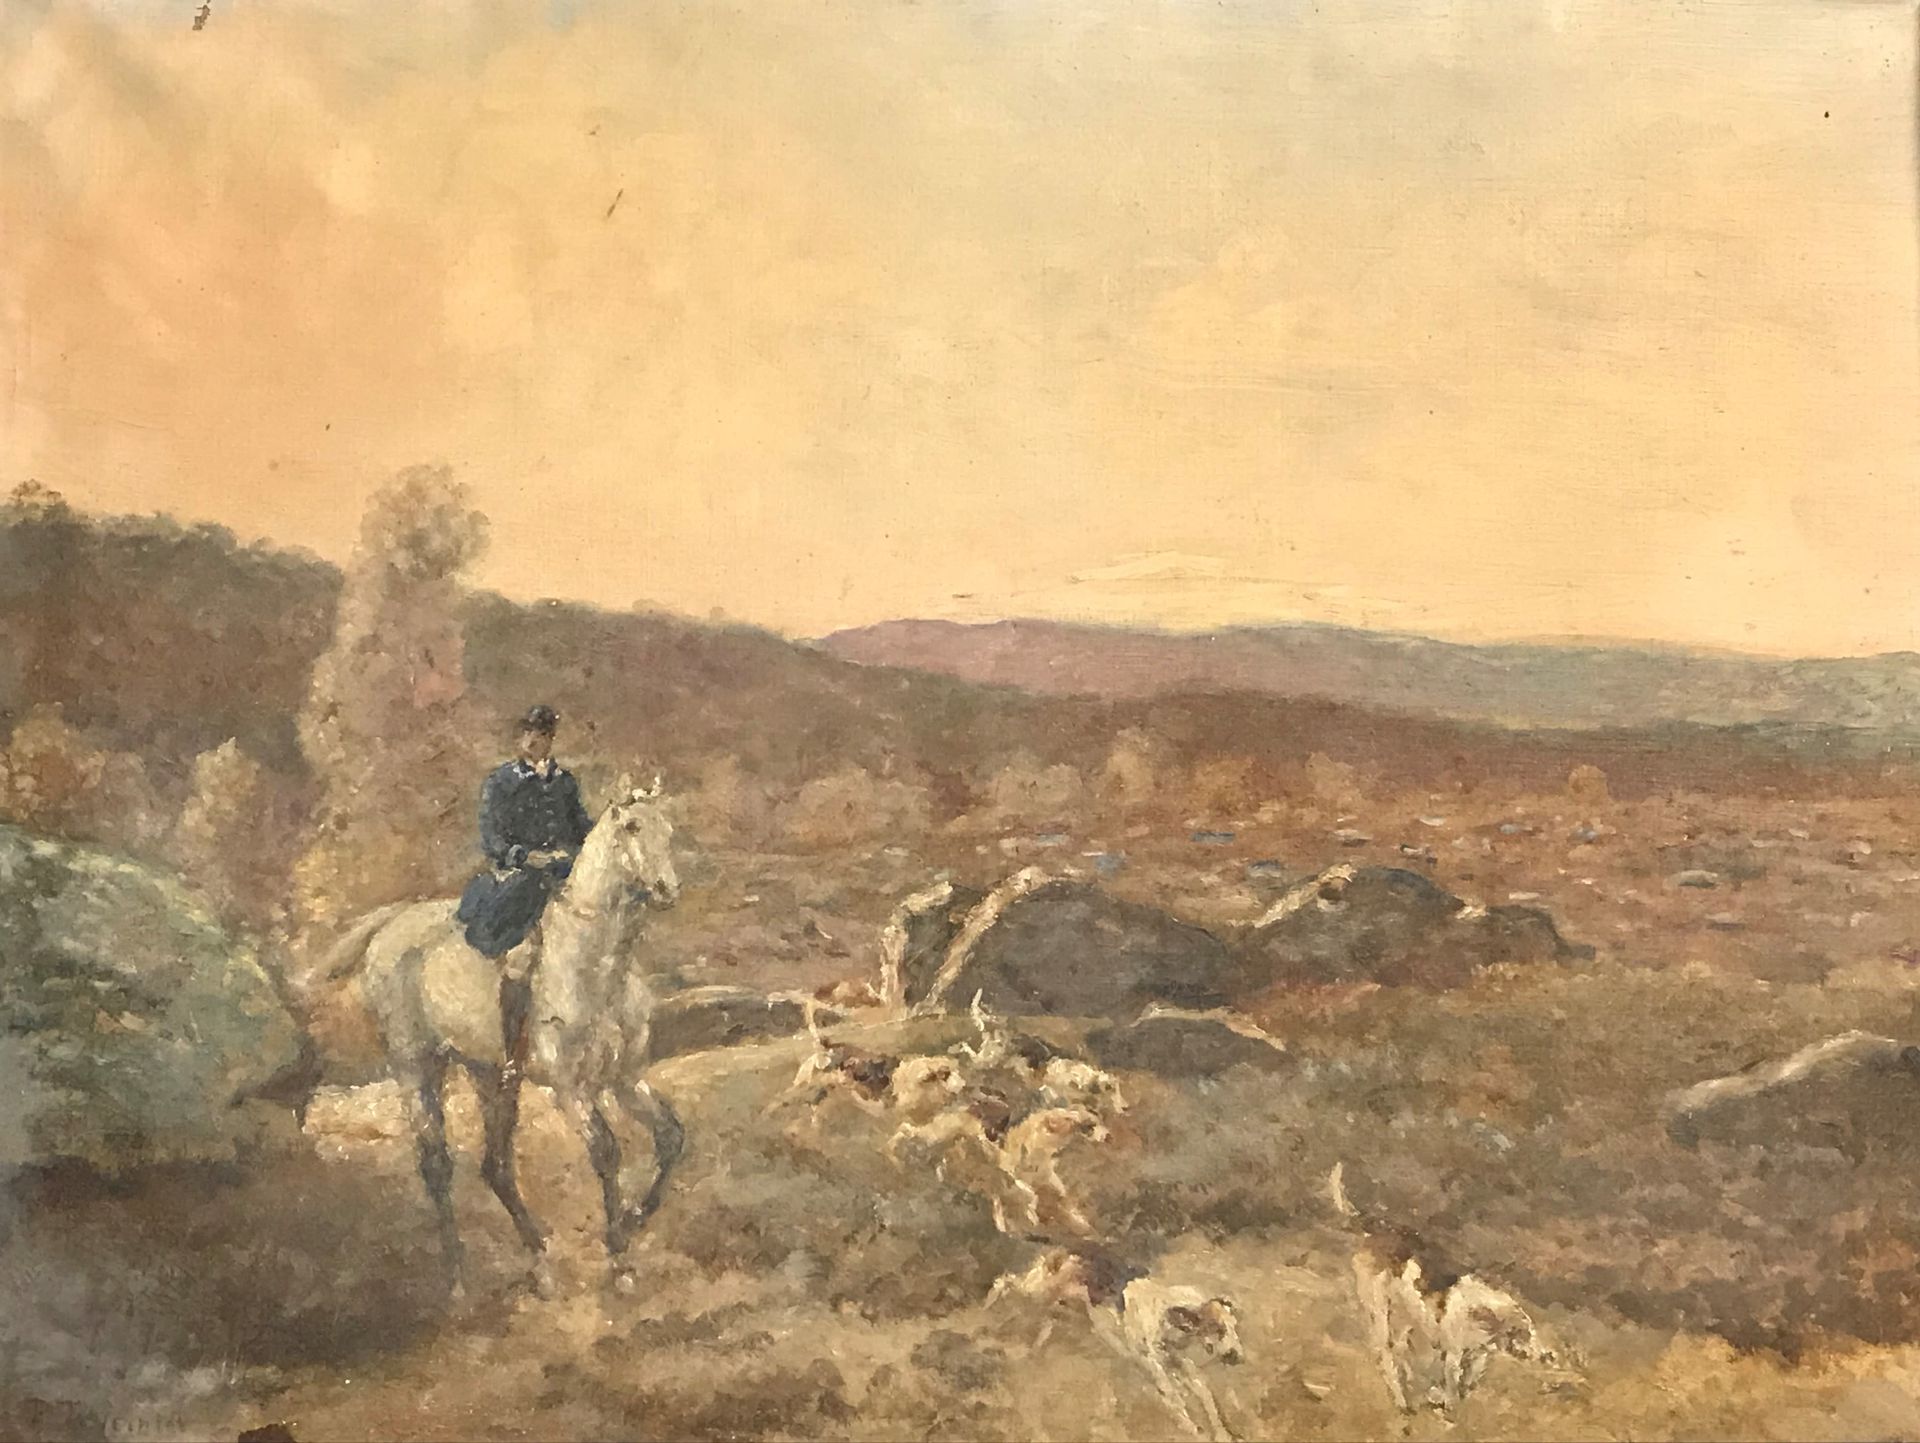 Paul TAVERNIER (1852-1943) 保罗-塔维尔尼耶(1852-1943)

用猎犬打猎

布面油画

左下方有签名

52 x 66,5 c&hellip;